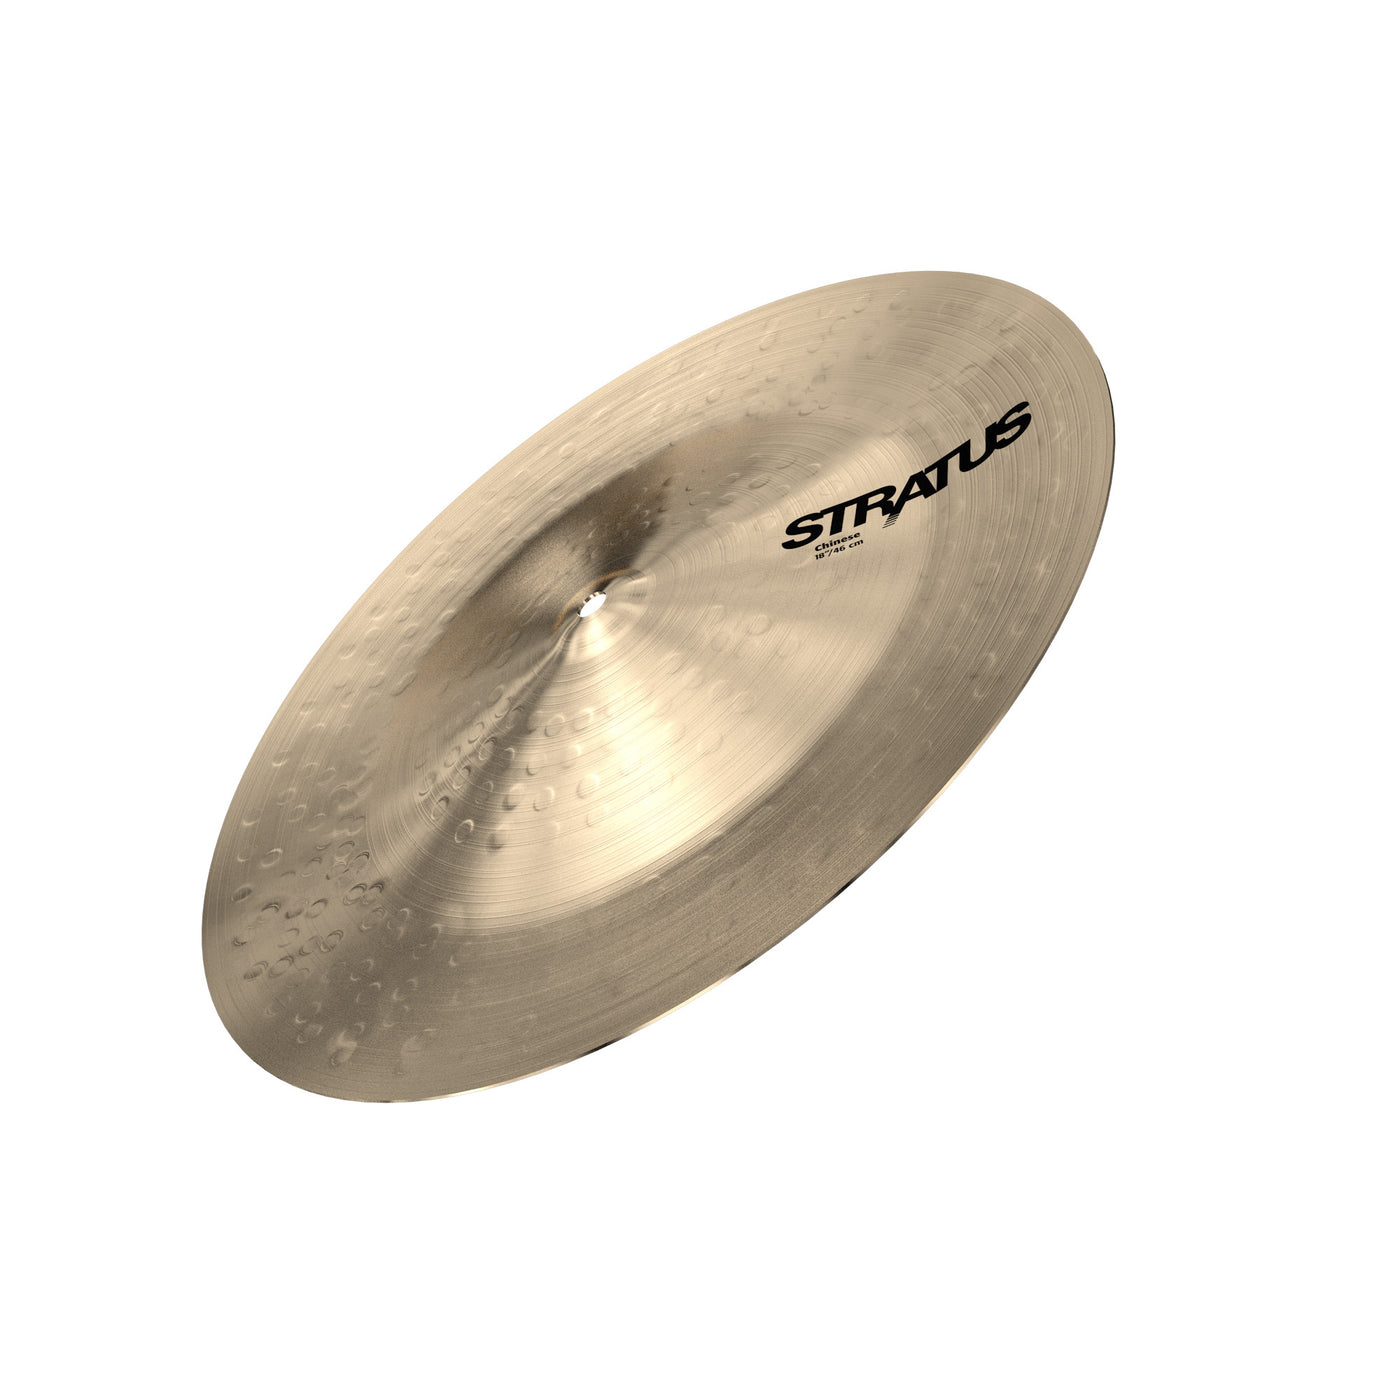 Sabian Stratus 18-Inch Chinese Cymbal